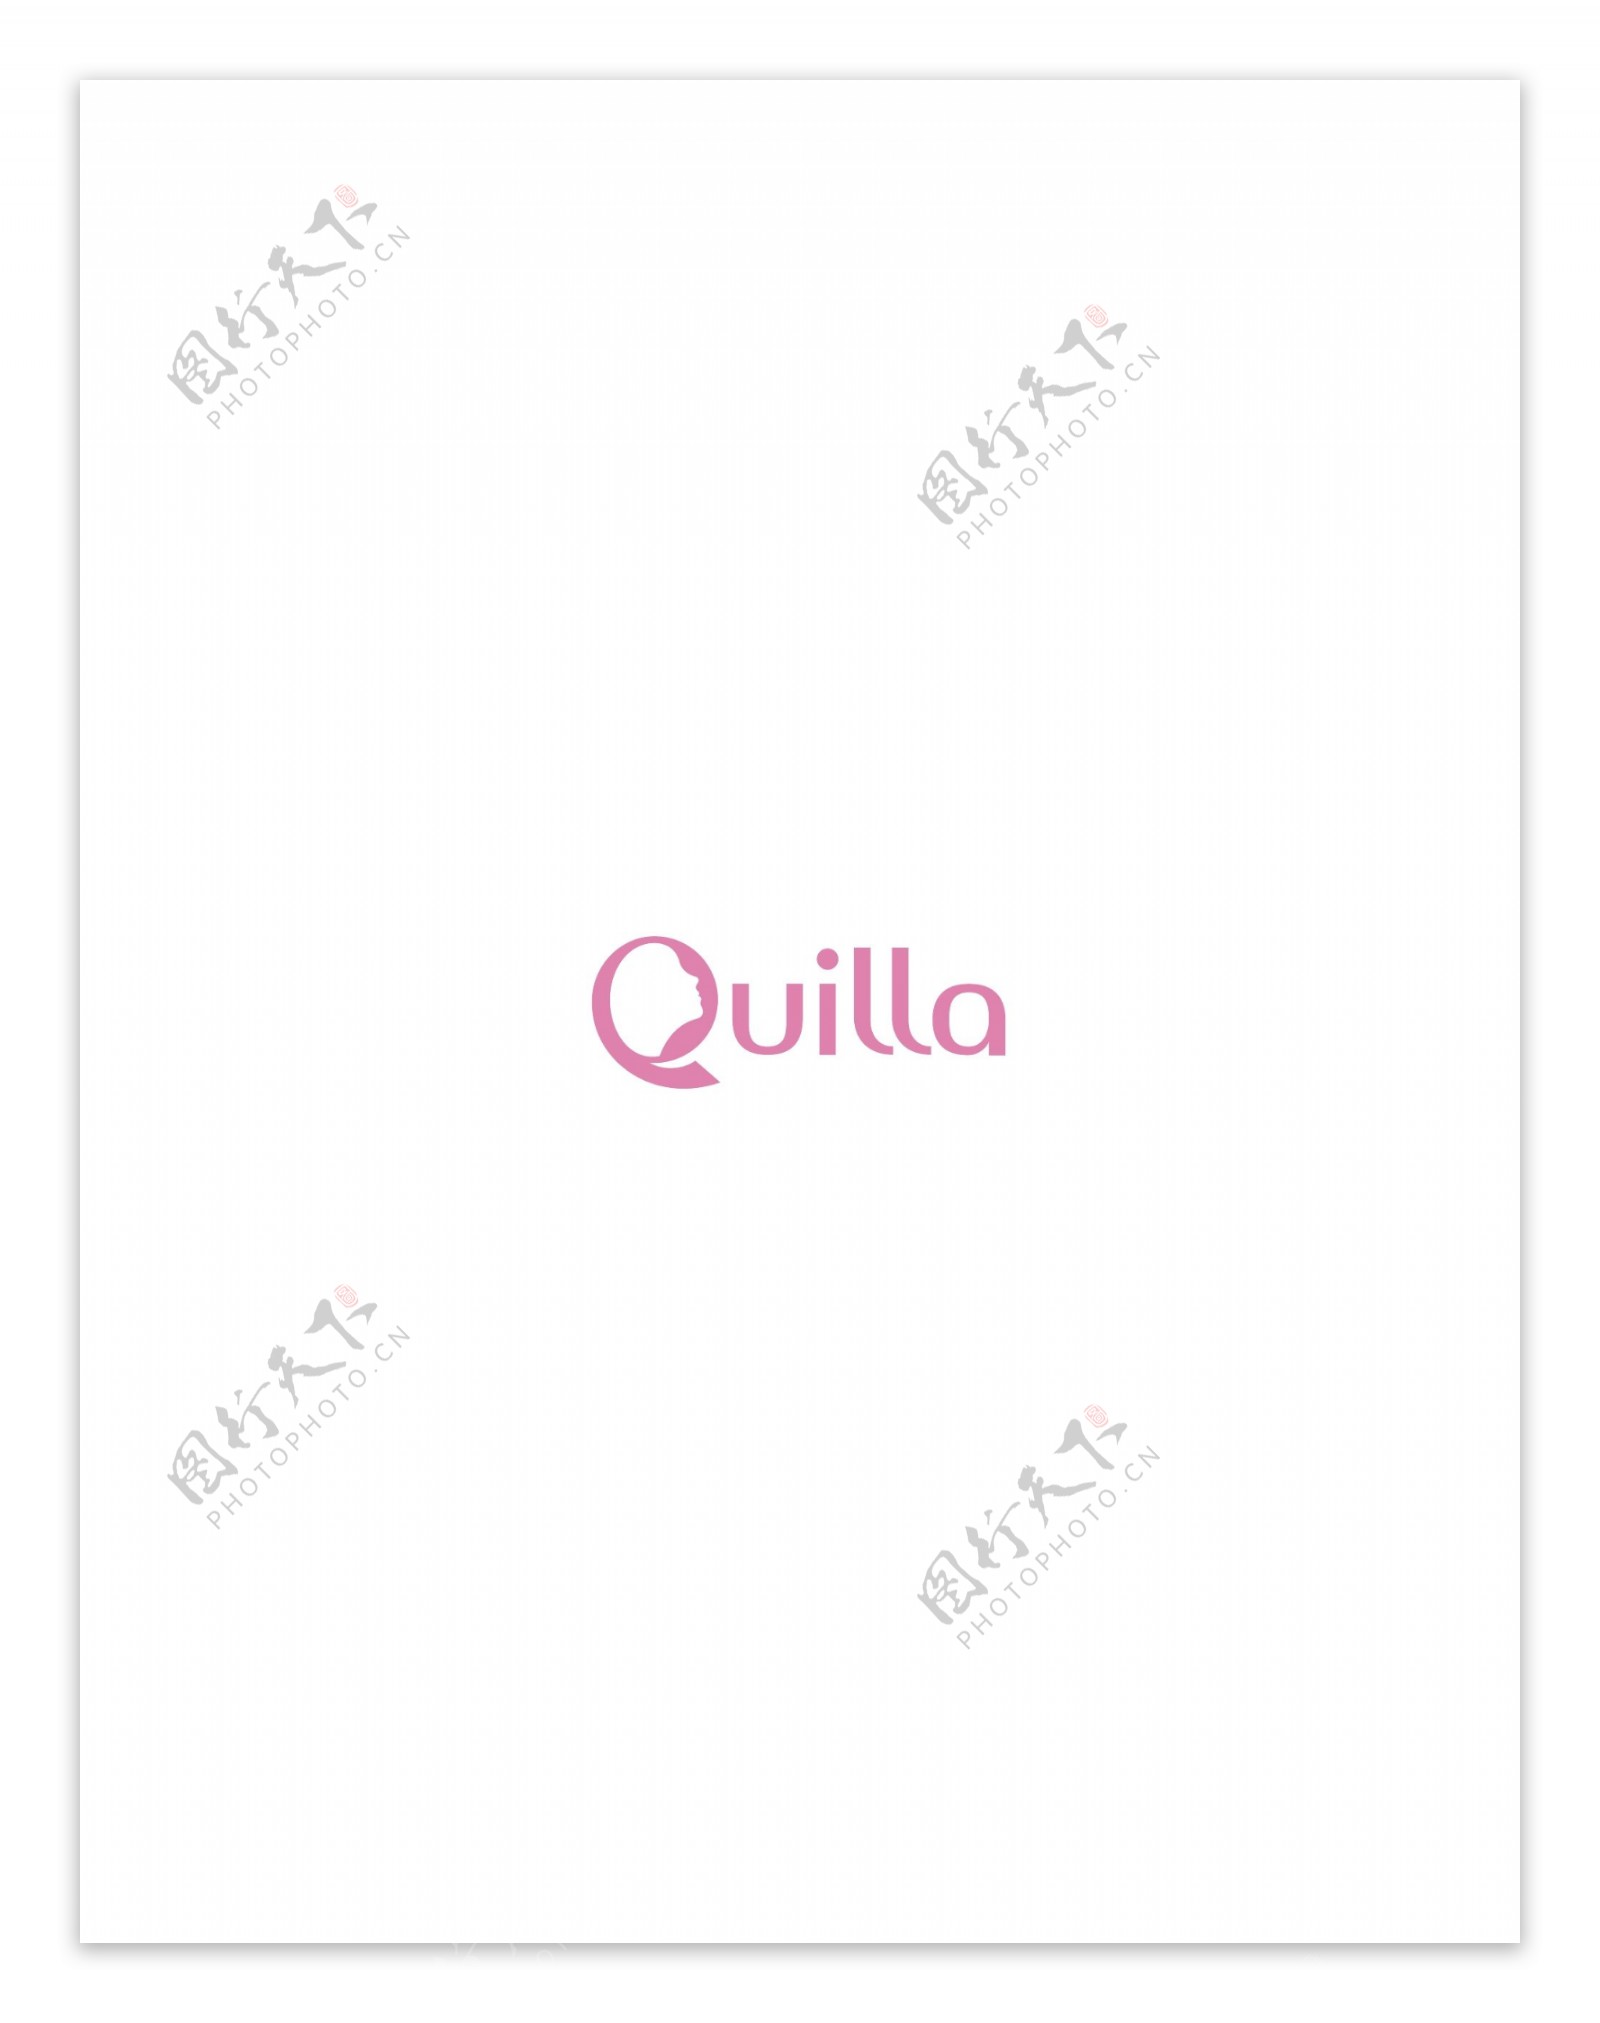 Quillalogo设计欣赏Quilla洗护品标志下载标志设计欣赏